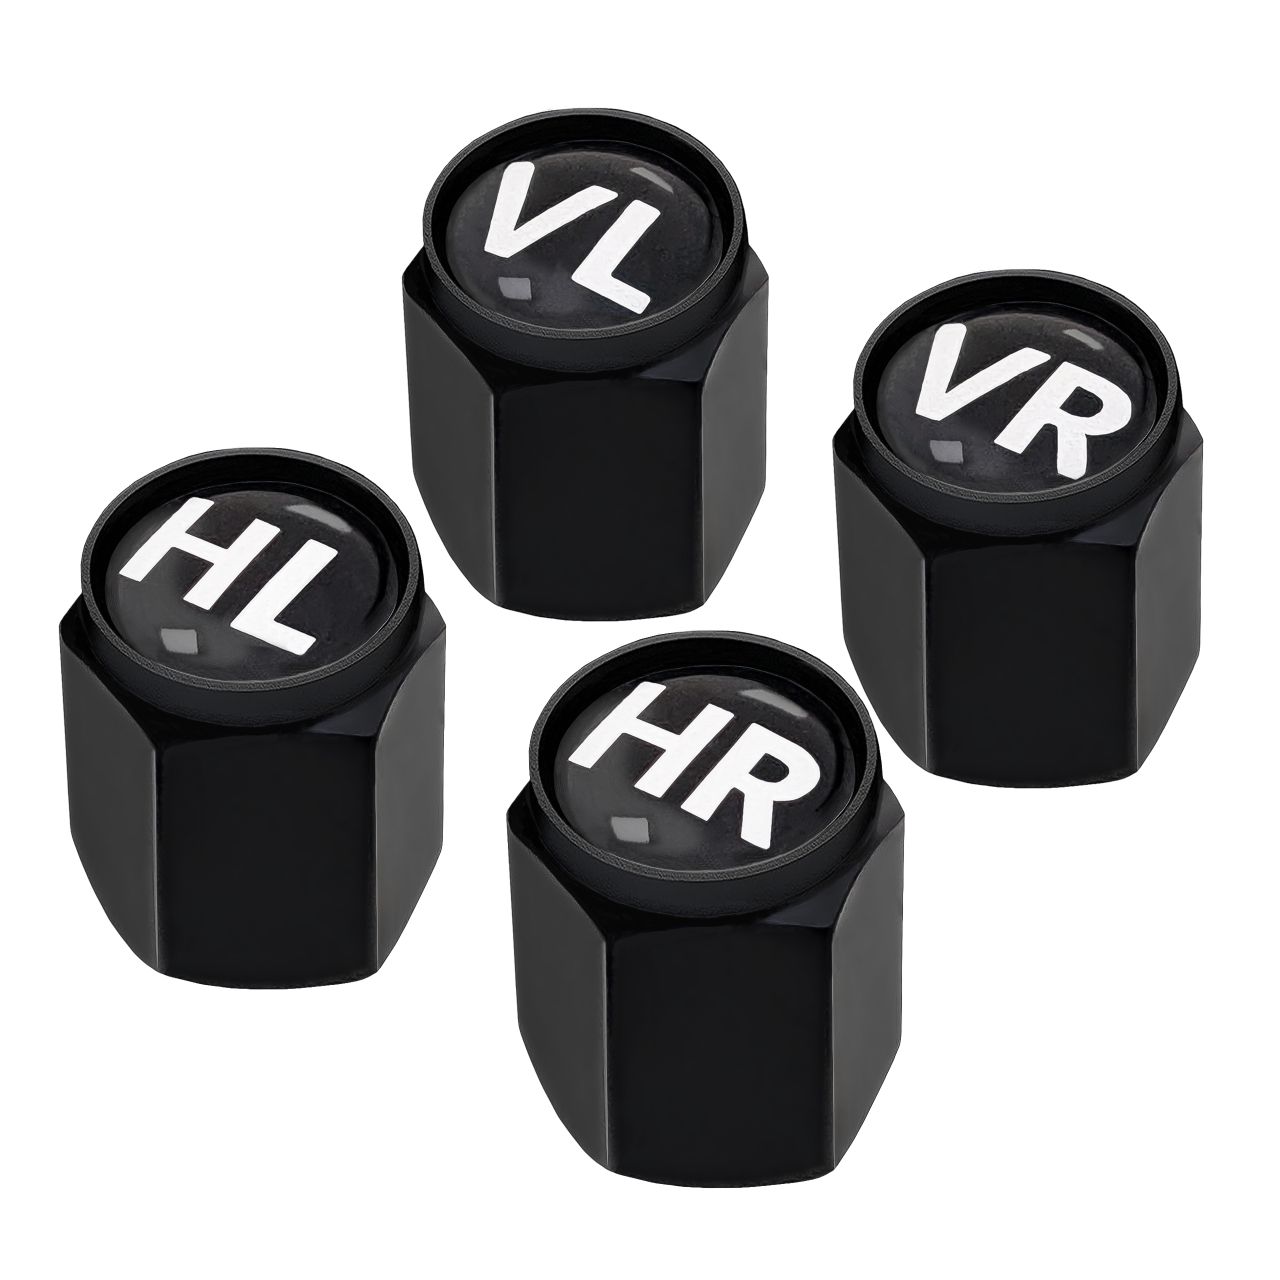 Alu Ventilkappen mit Beschriftung VL,VR,HL,HR in schwarz 4er Set